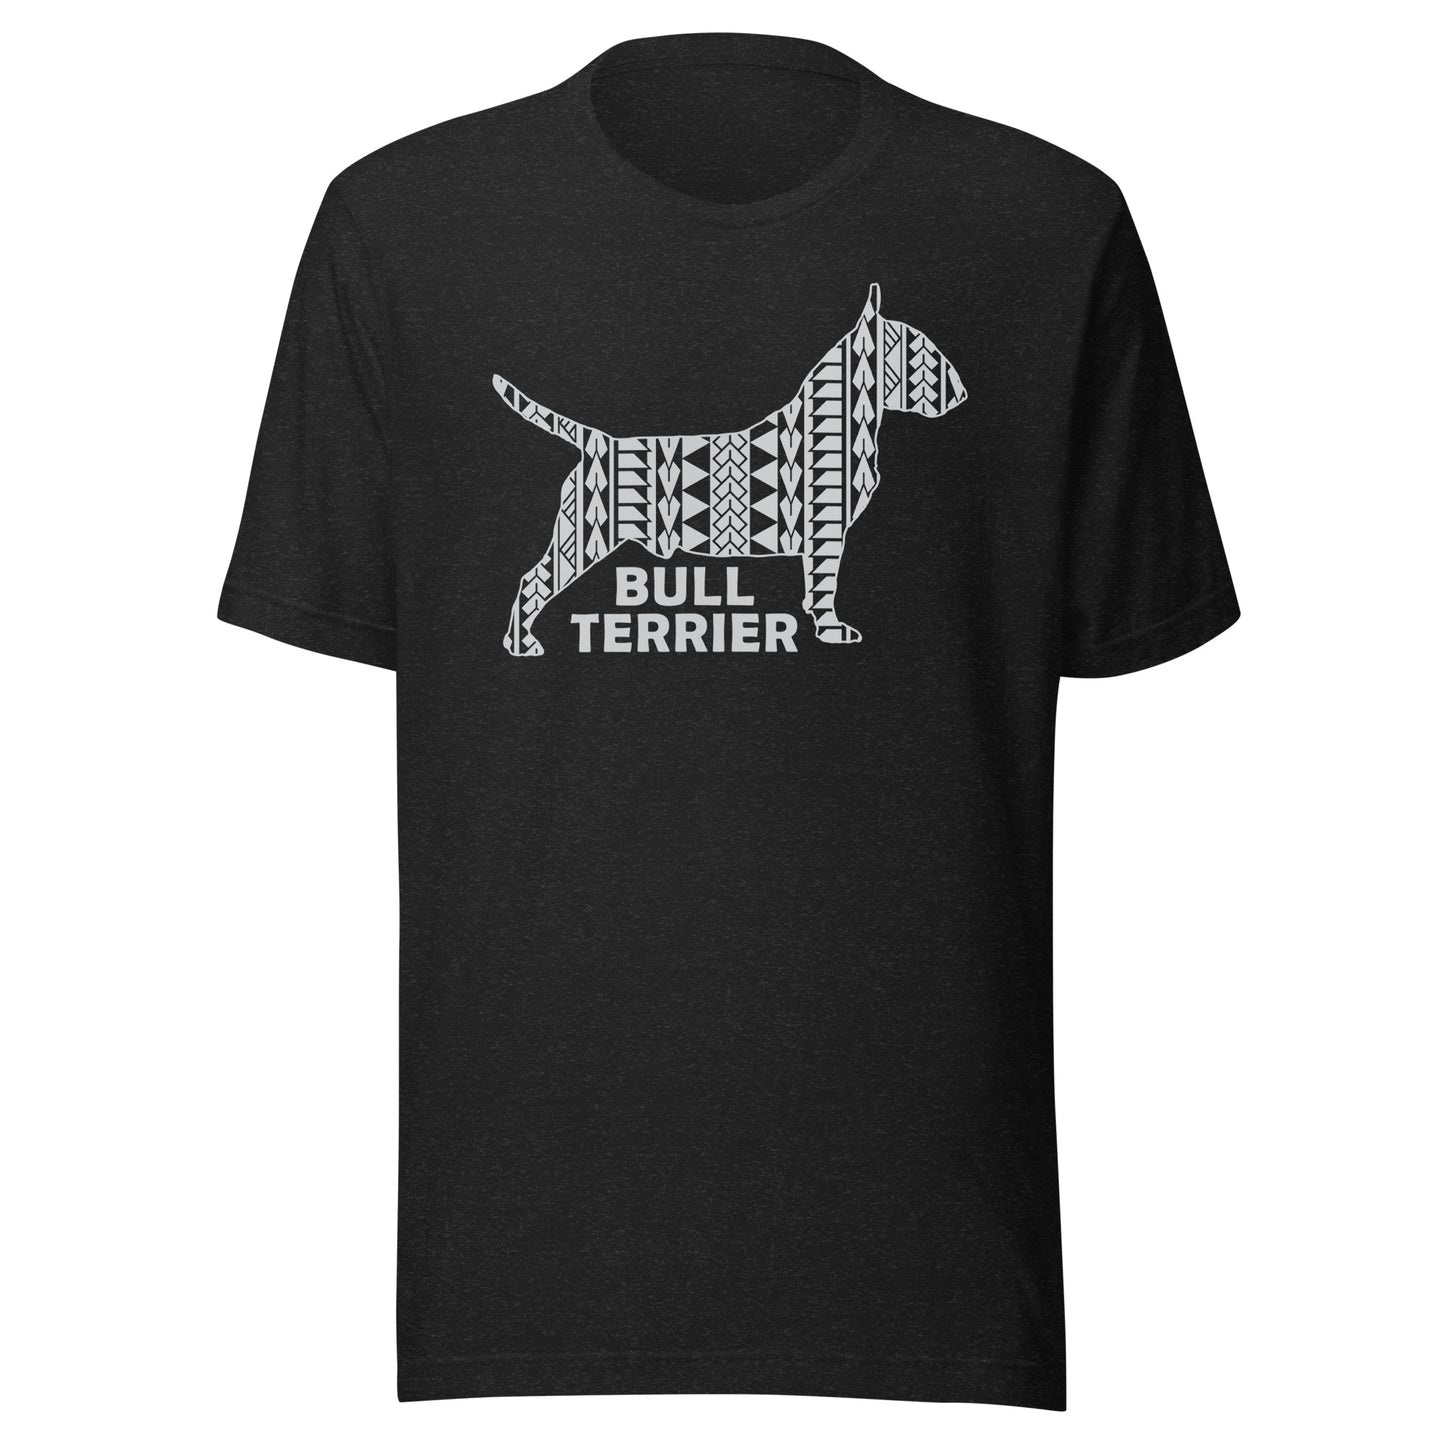 Bull Terrier Polynesian t-shirt heather by Dog Artistry.